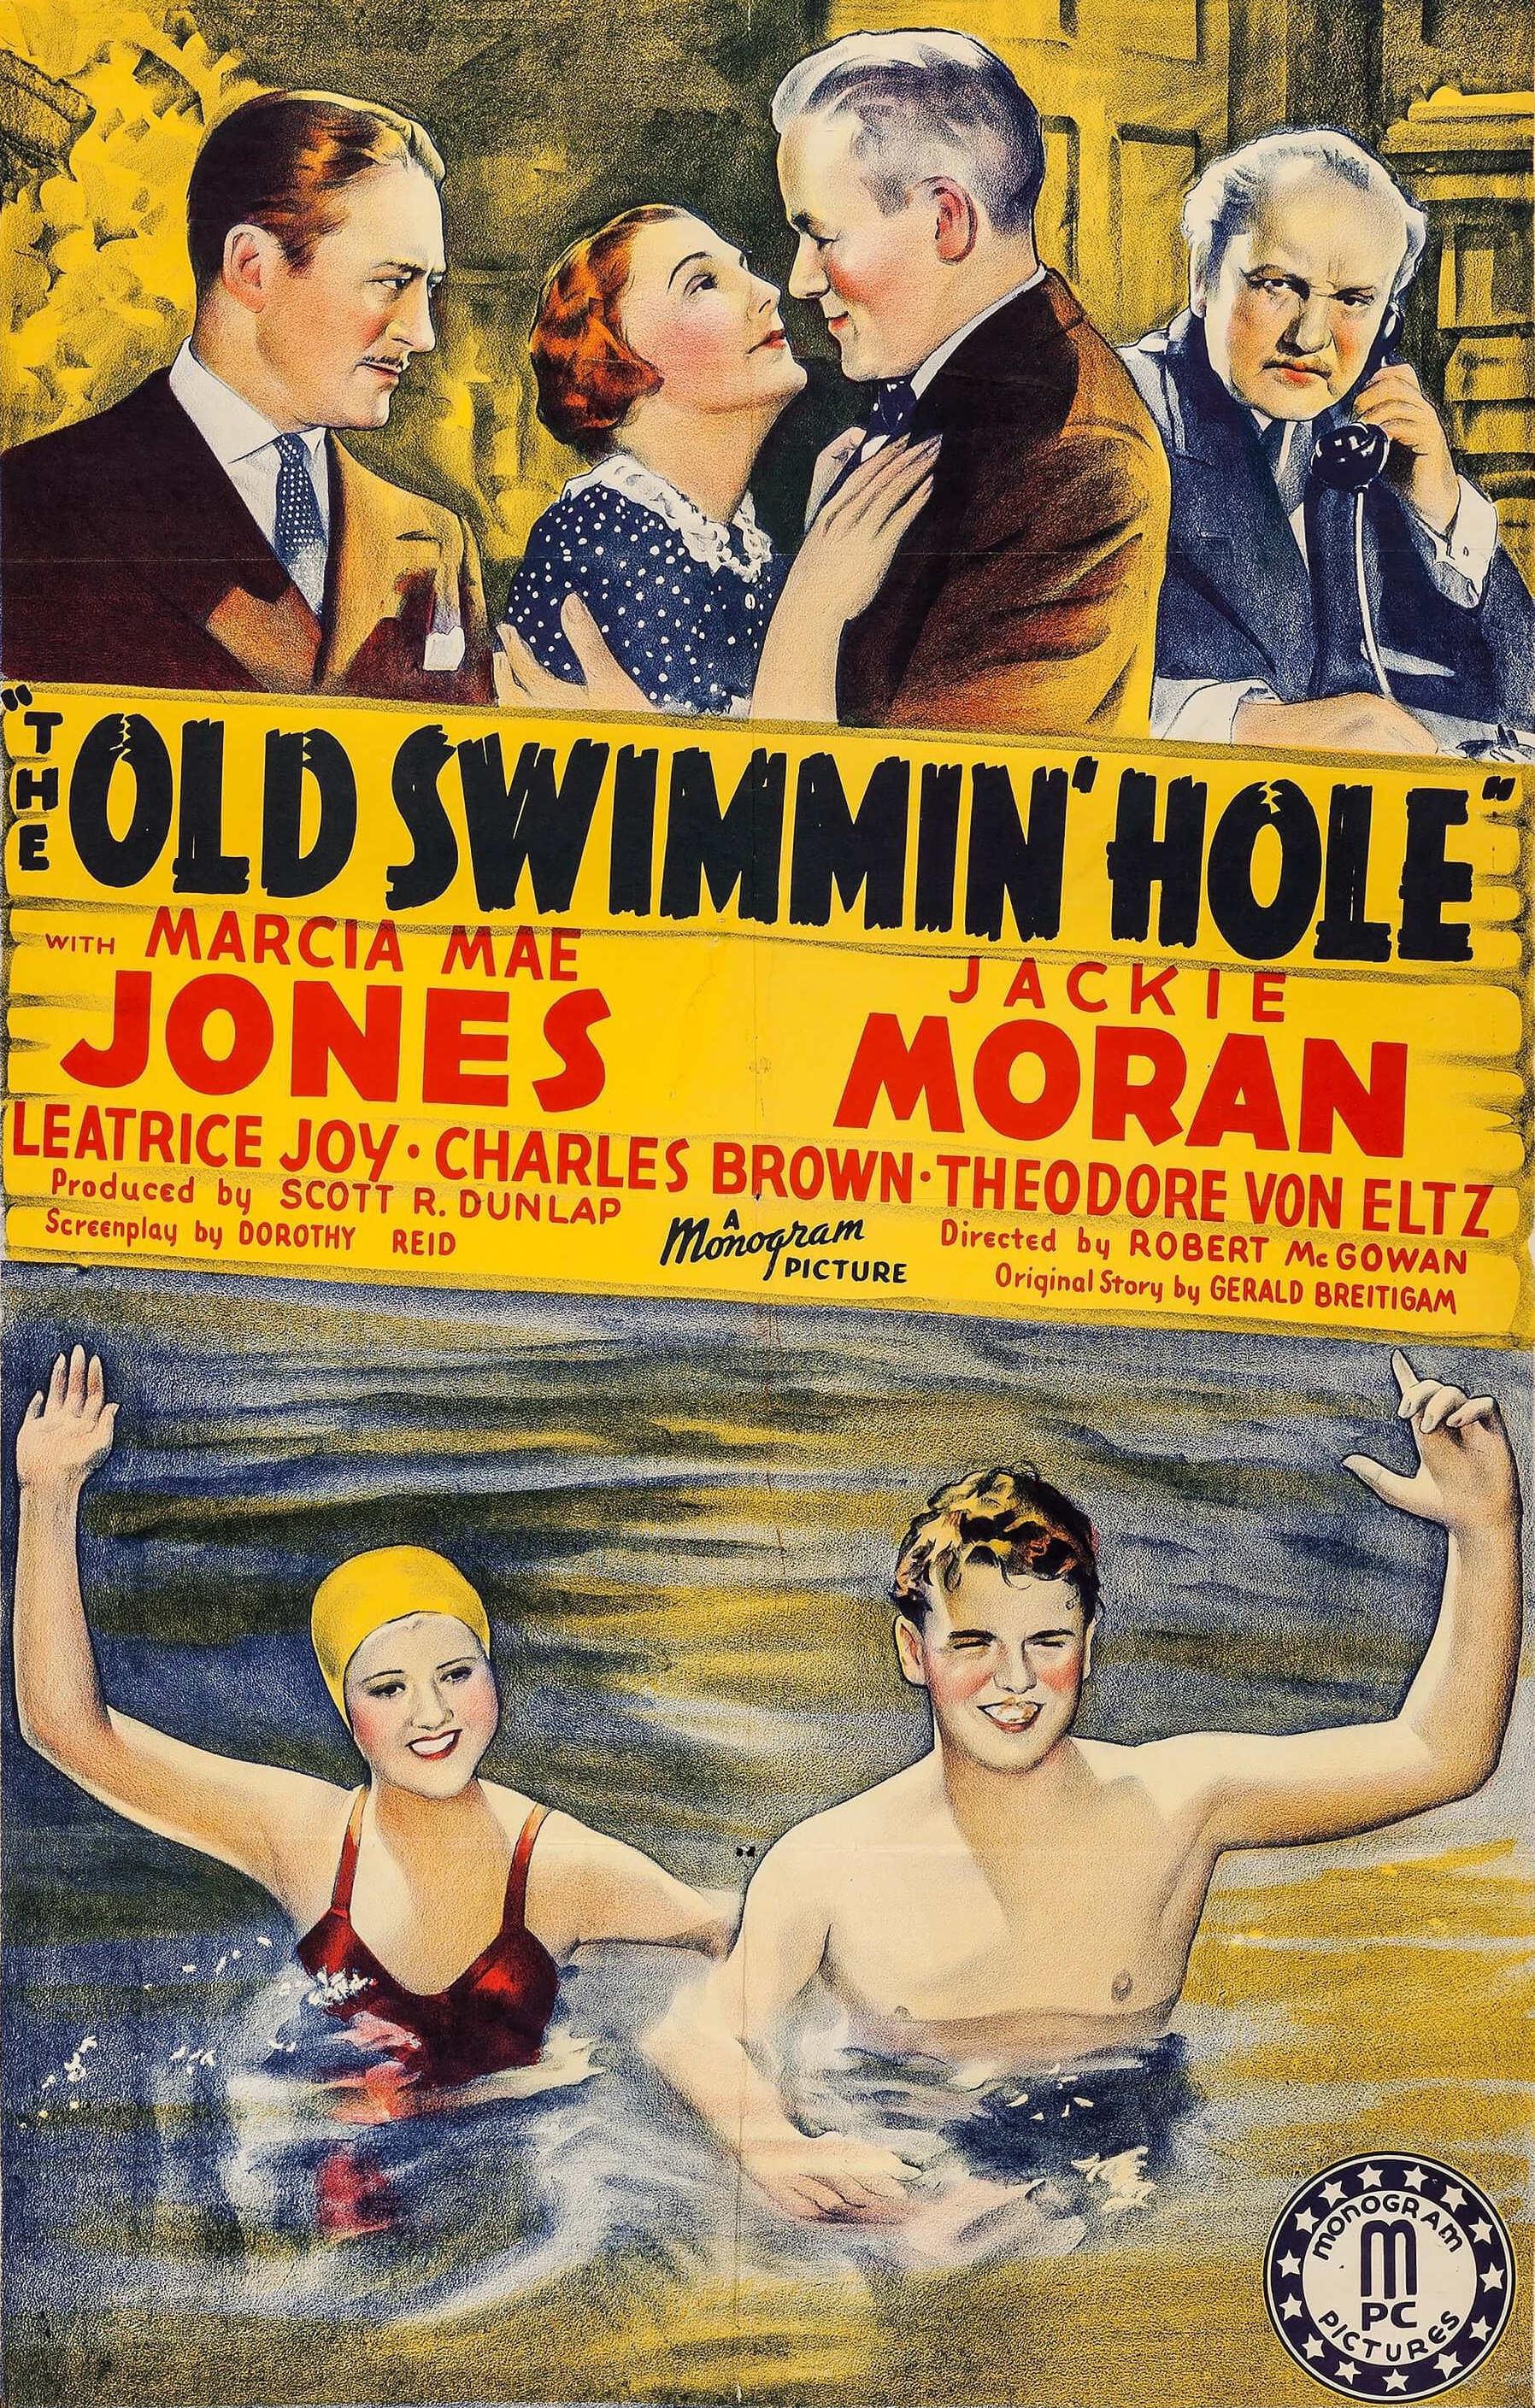 The Old Swimmin' Hole (1940) Screenshot 1 